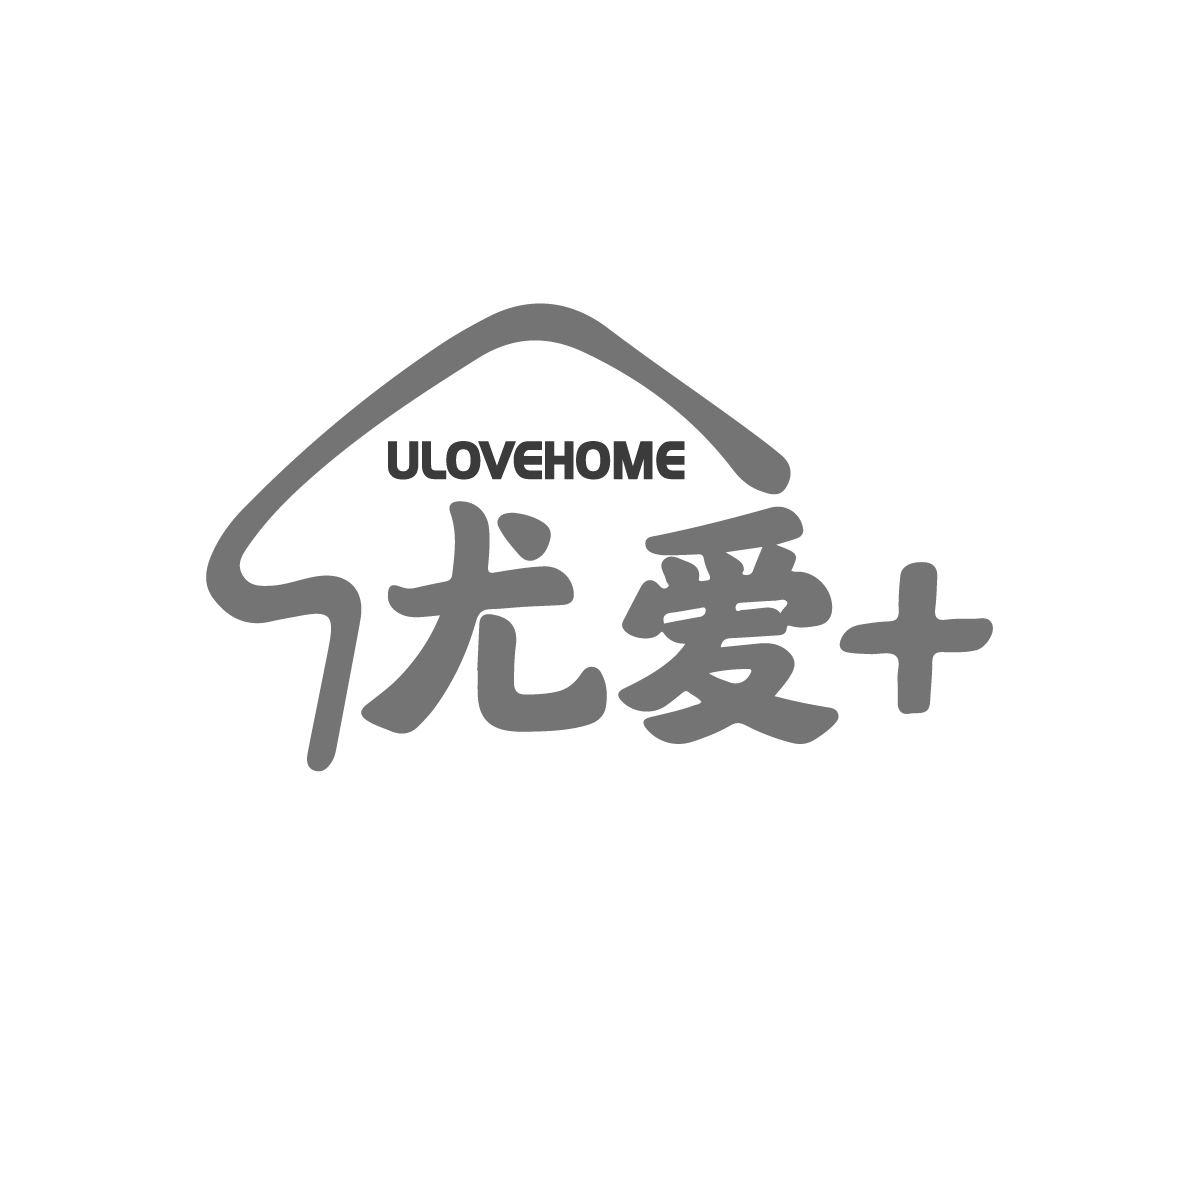 ULOVEHOME Ȱ +